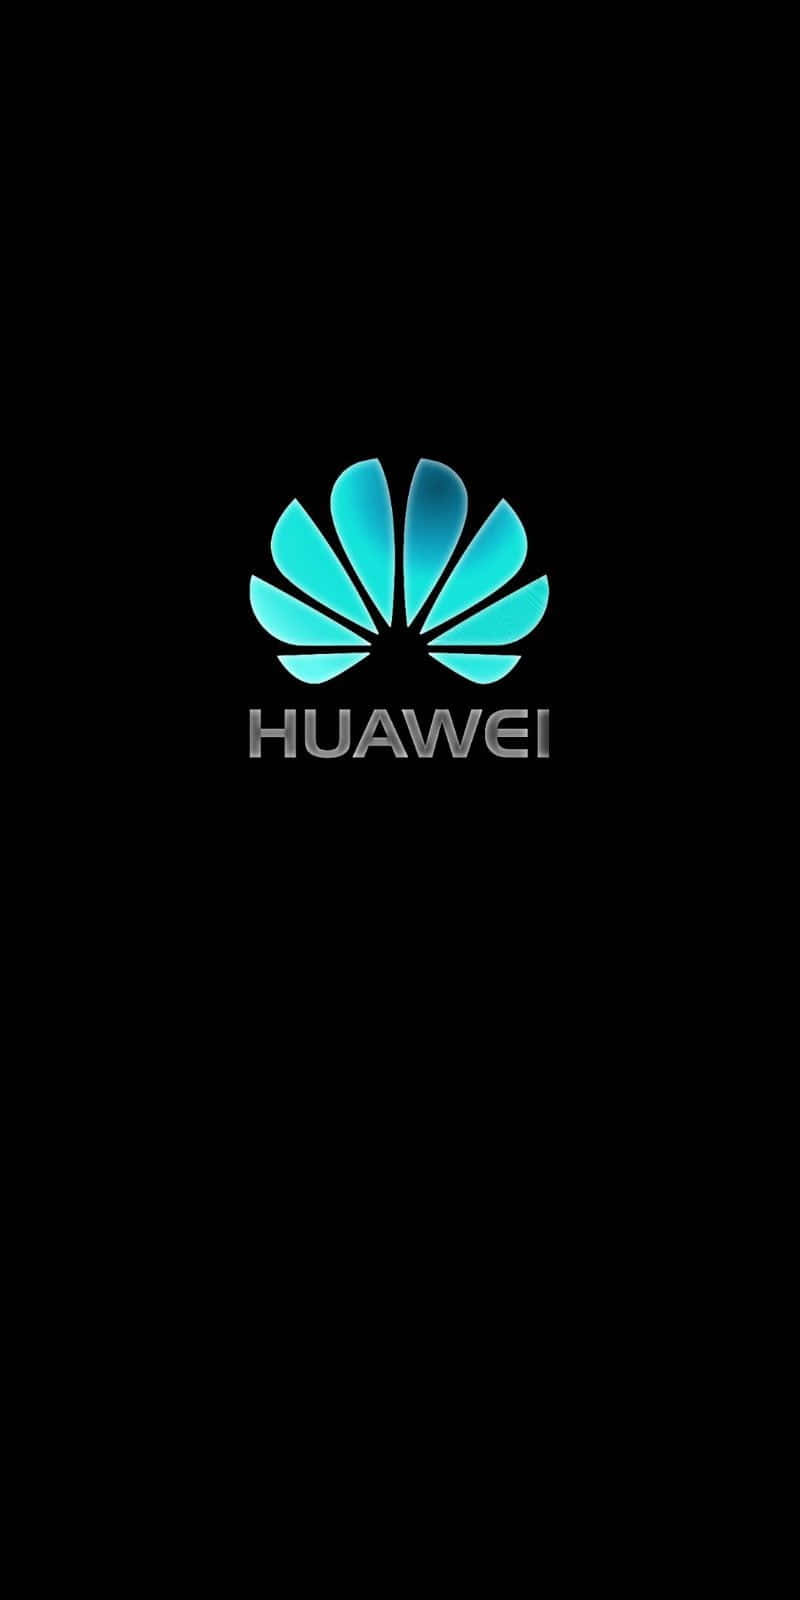 Iltelefono Huawei Innovativo